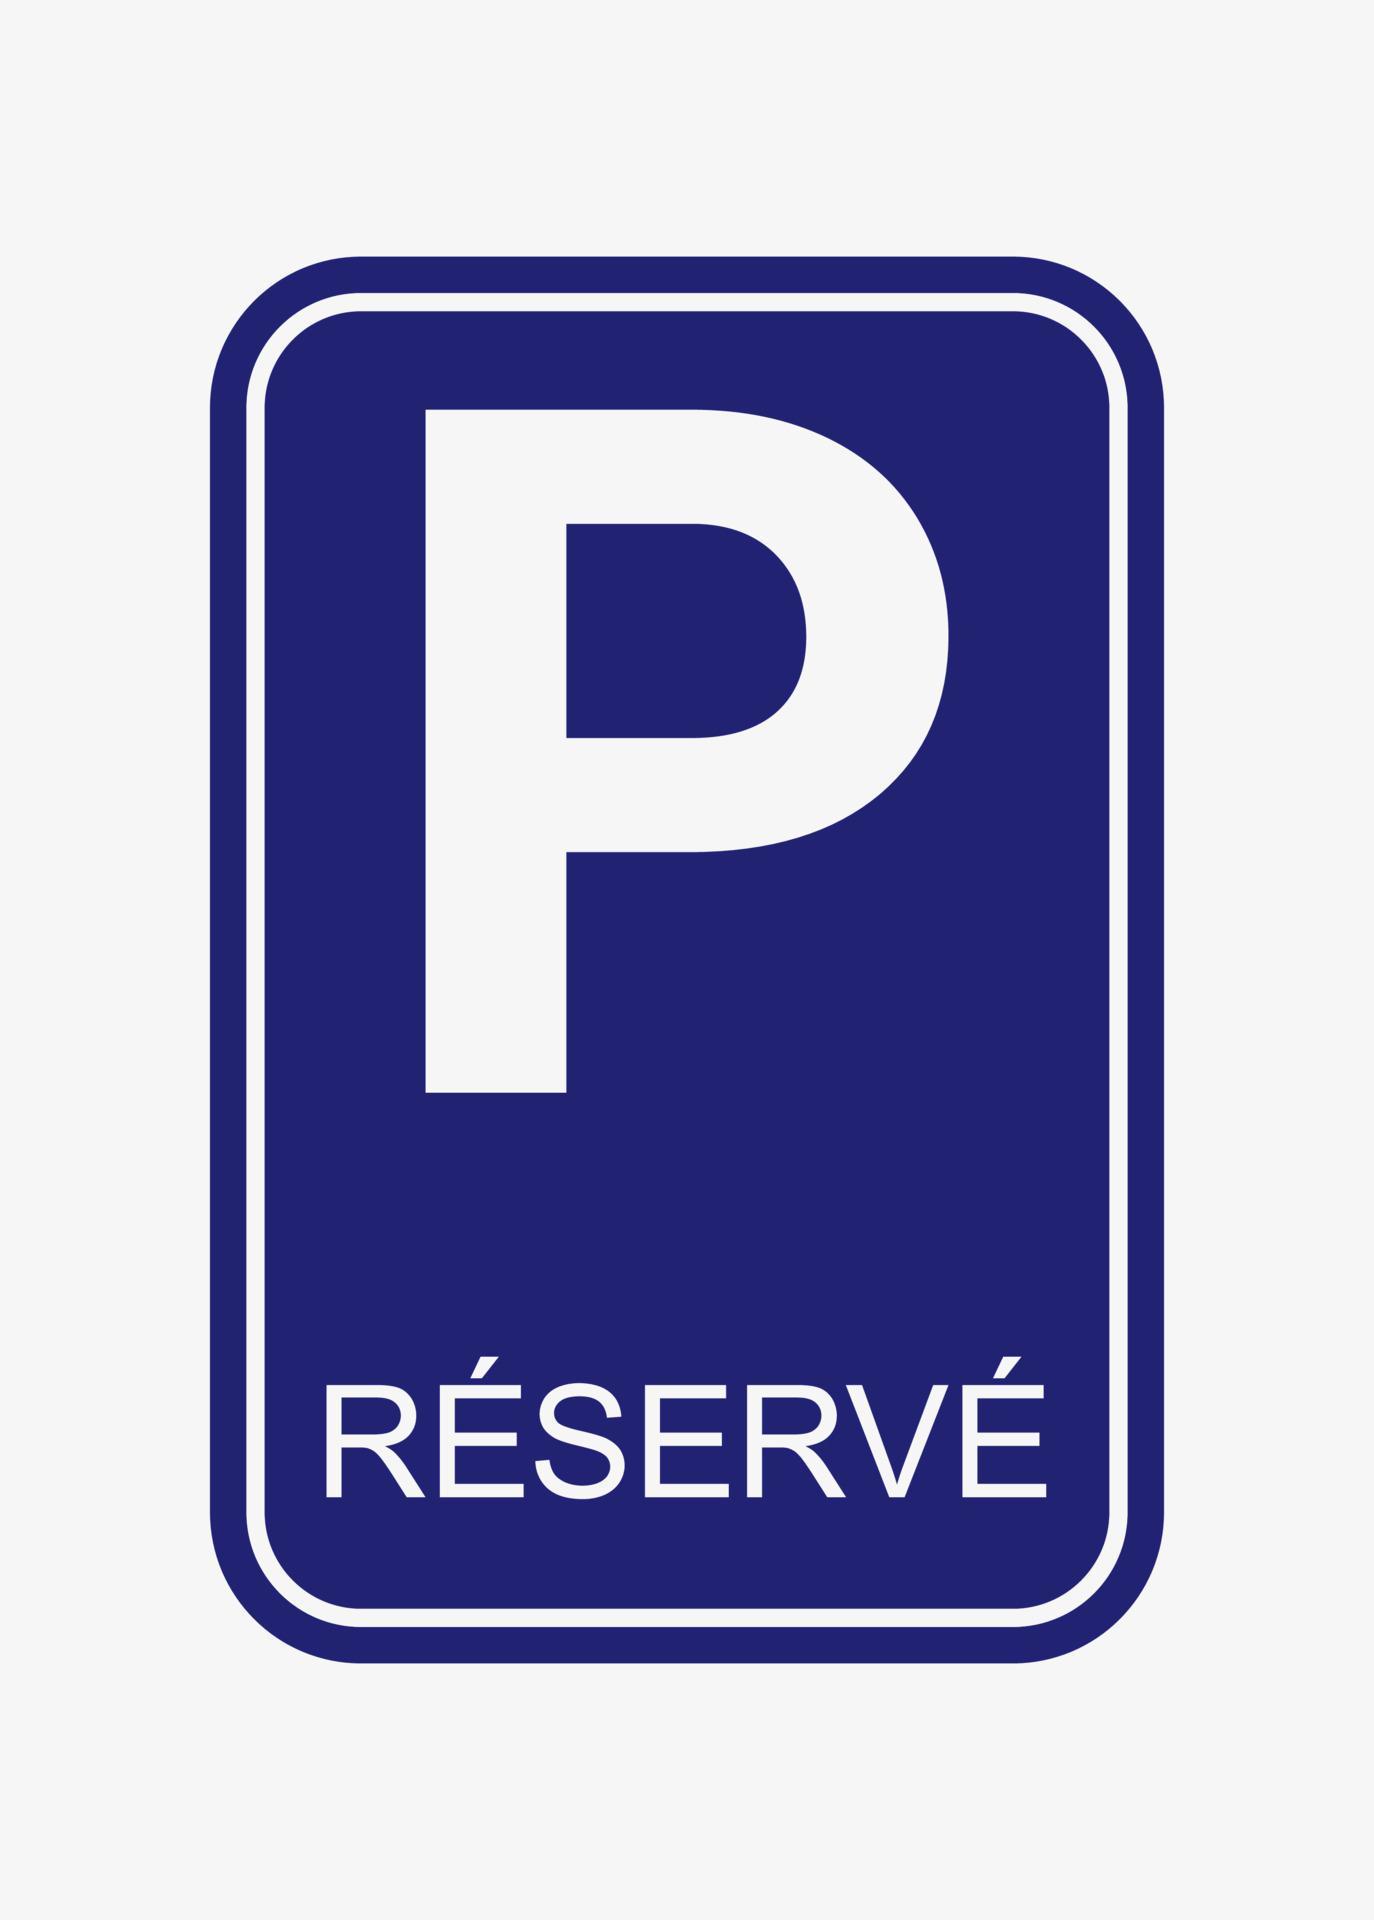 Parking sign vector illustration. Reserved parking space road sign ...